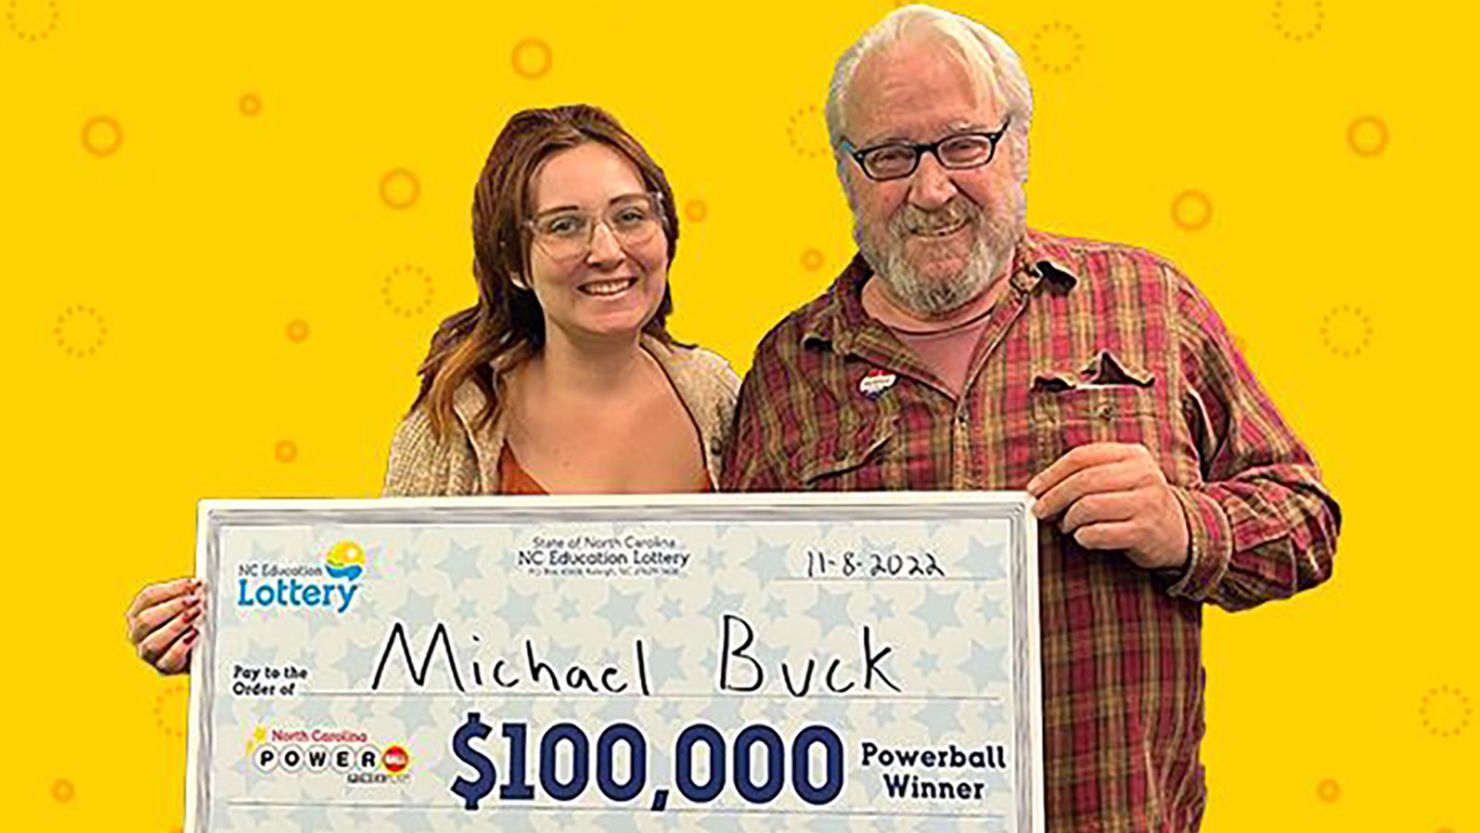 Michael Buck, right, won $100,000 on Powerball.